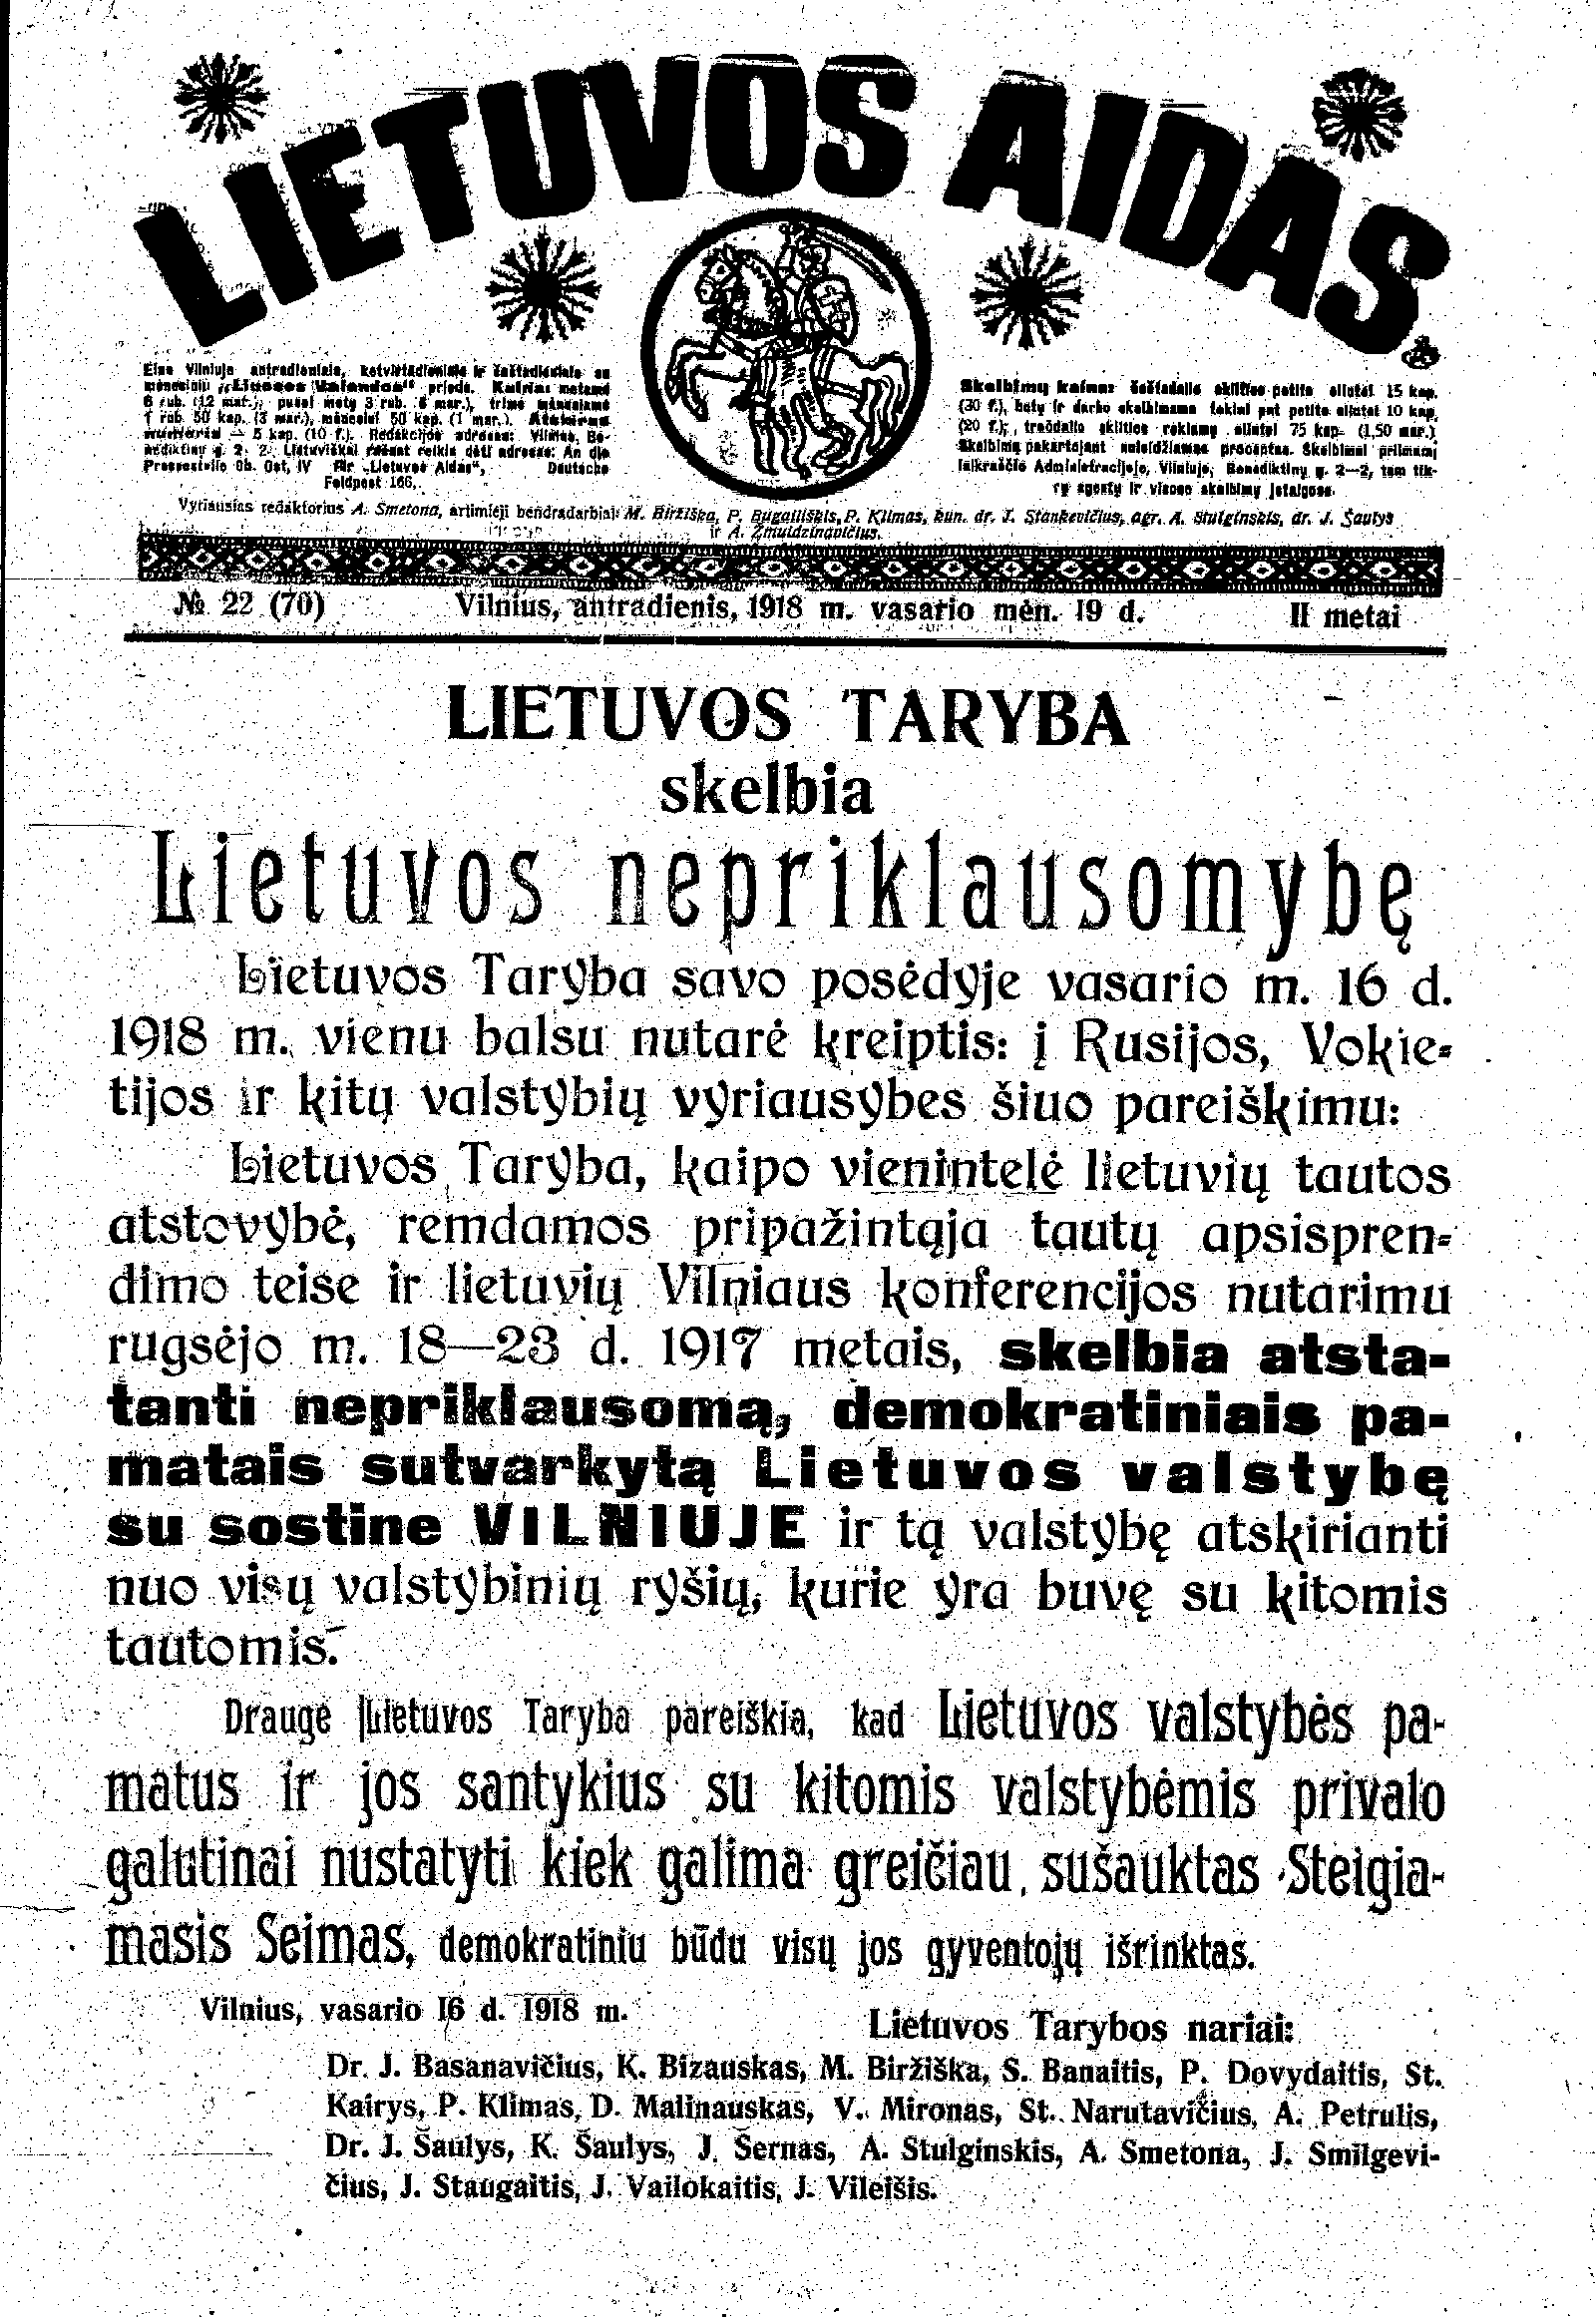 1918 met vasario #19 d. 'Lietuvos aido' faksimil